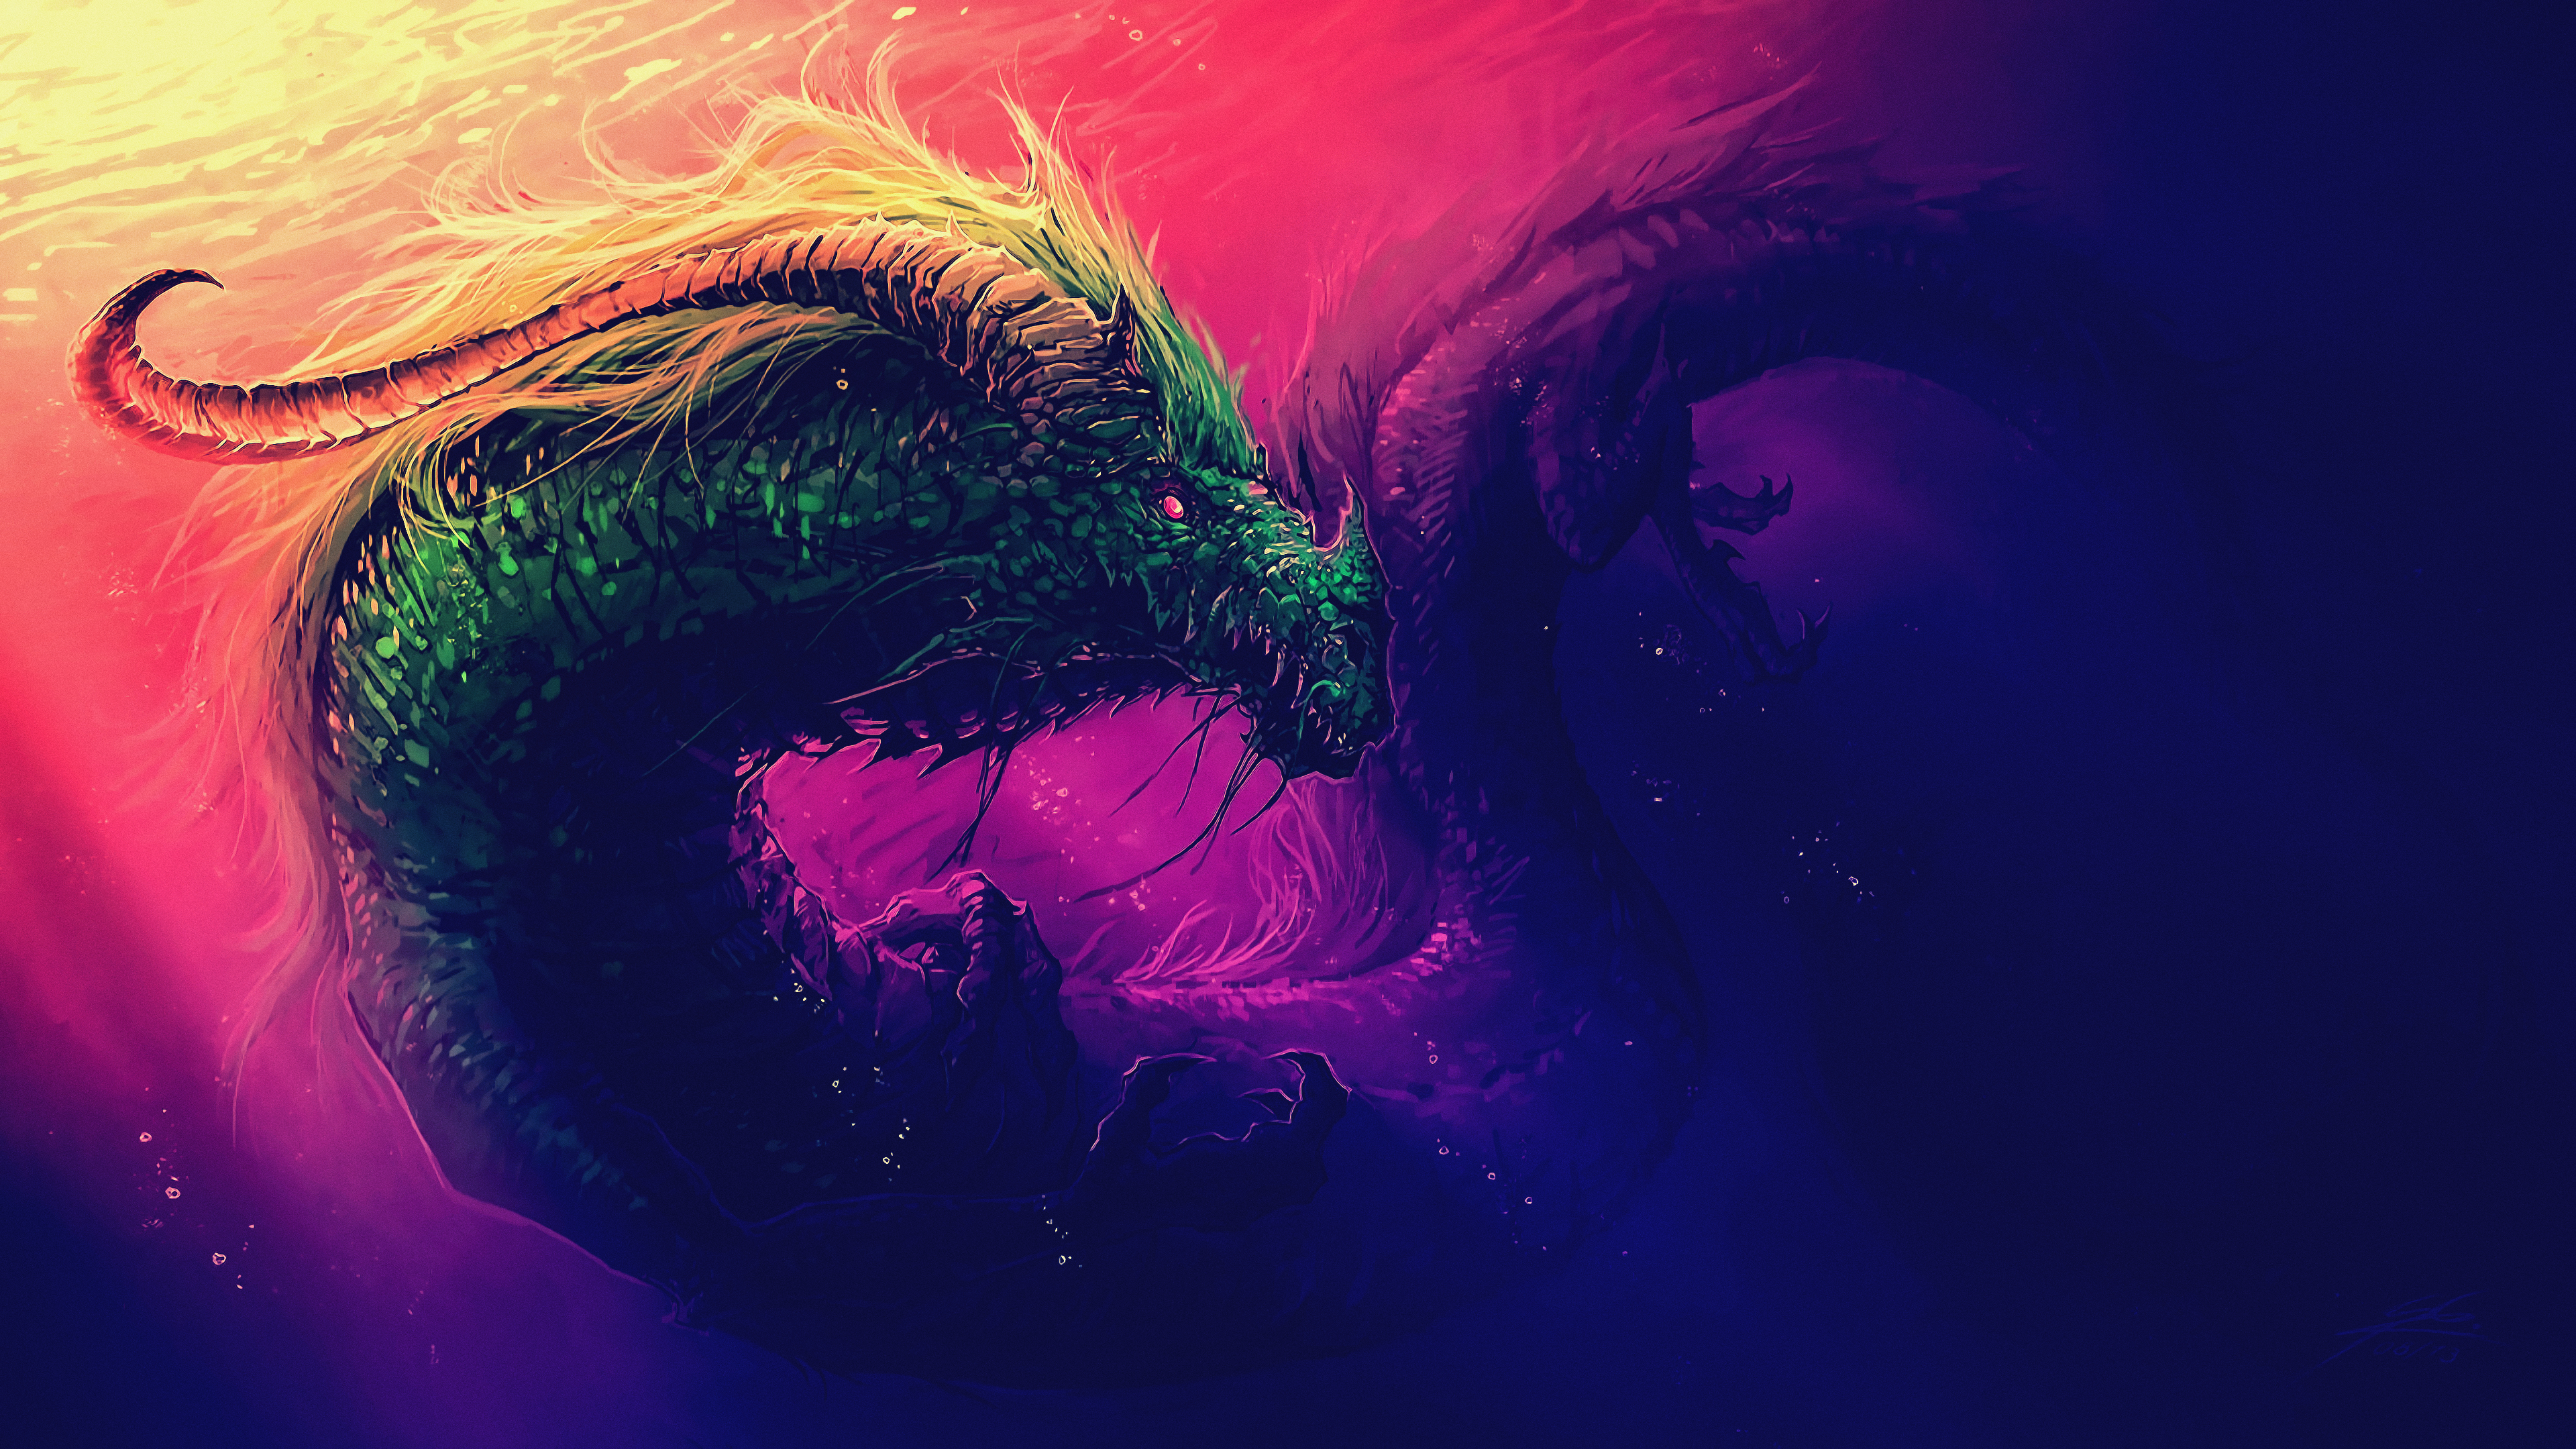 General 3840x2160 fantasy art artwork fan art science fiction concept art dark digital art water underwater dragon creature mythology sea monsters animals